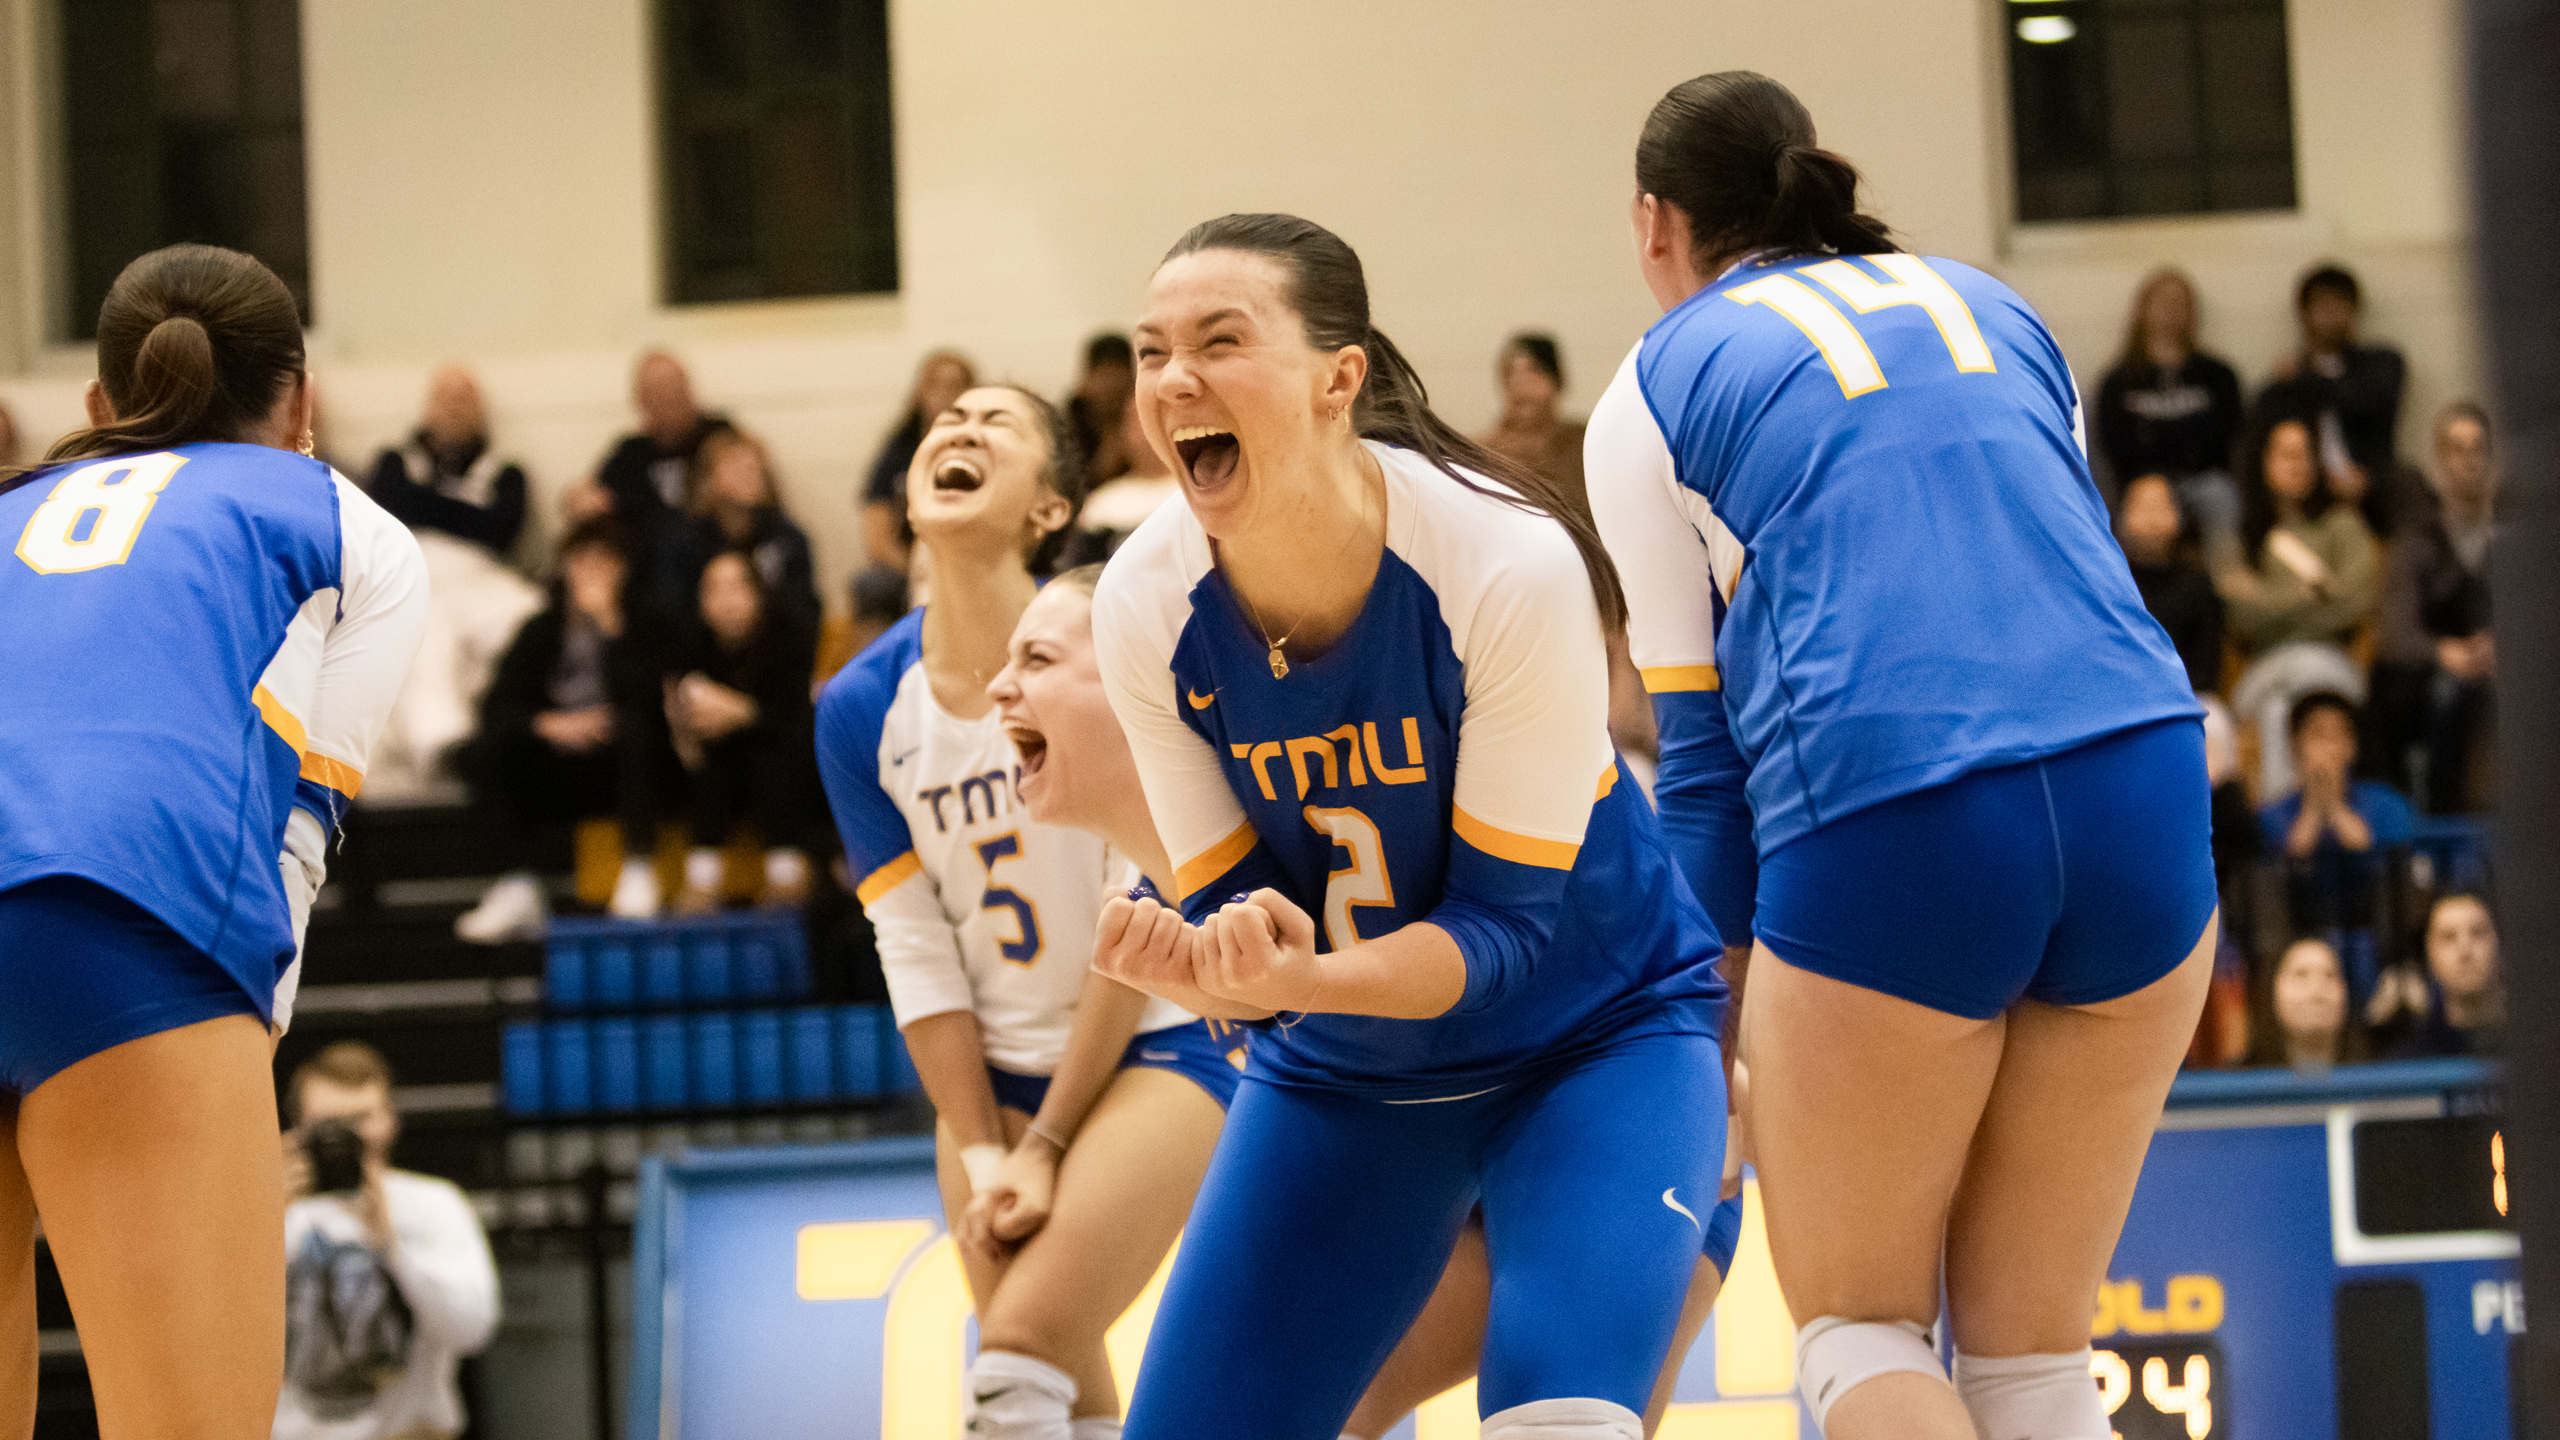 TMU Bold women's volleyball player Julie Gordon screams in excitement